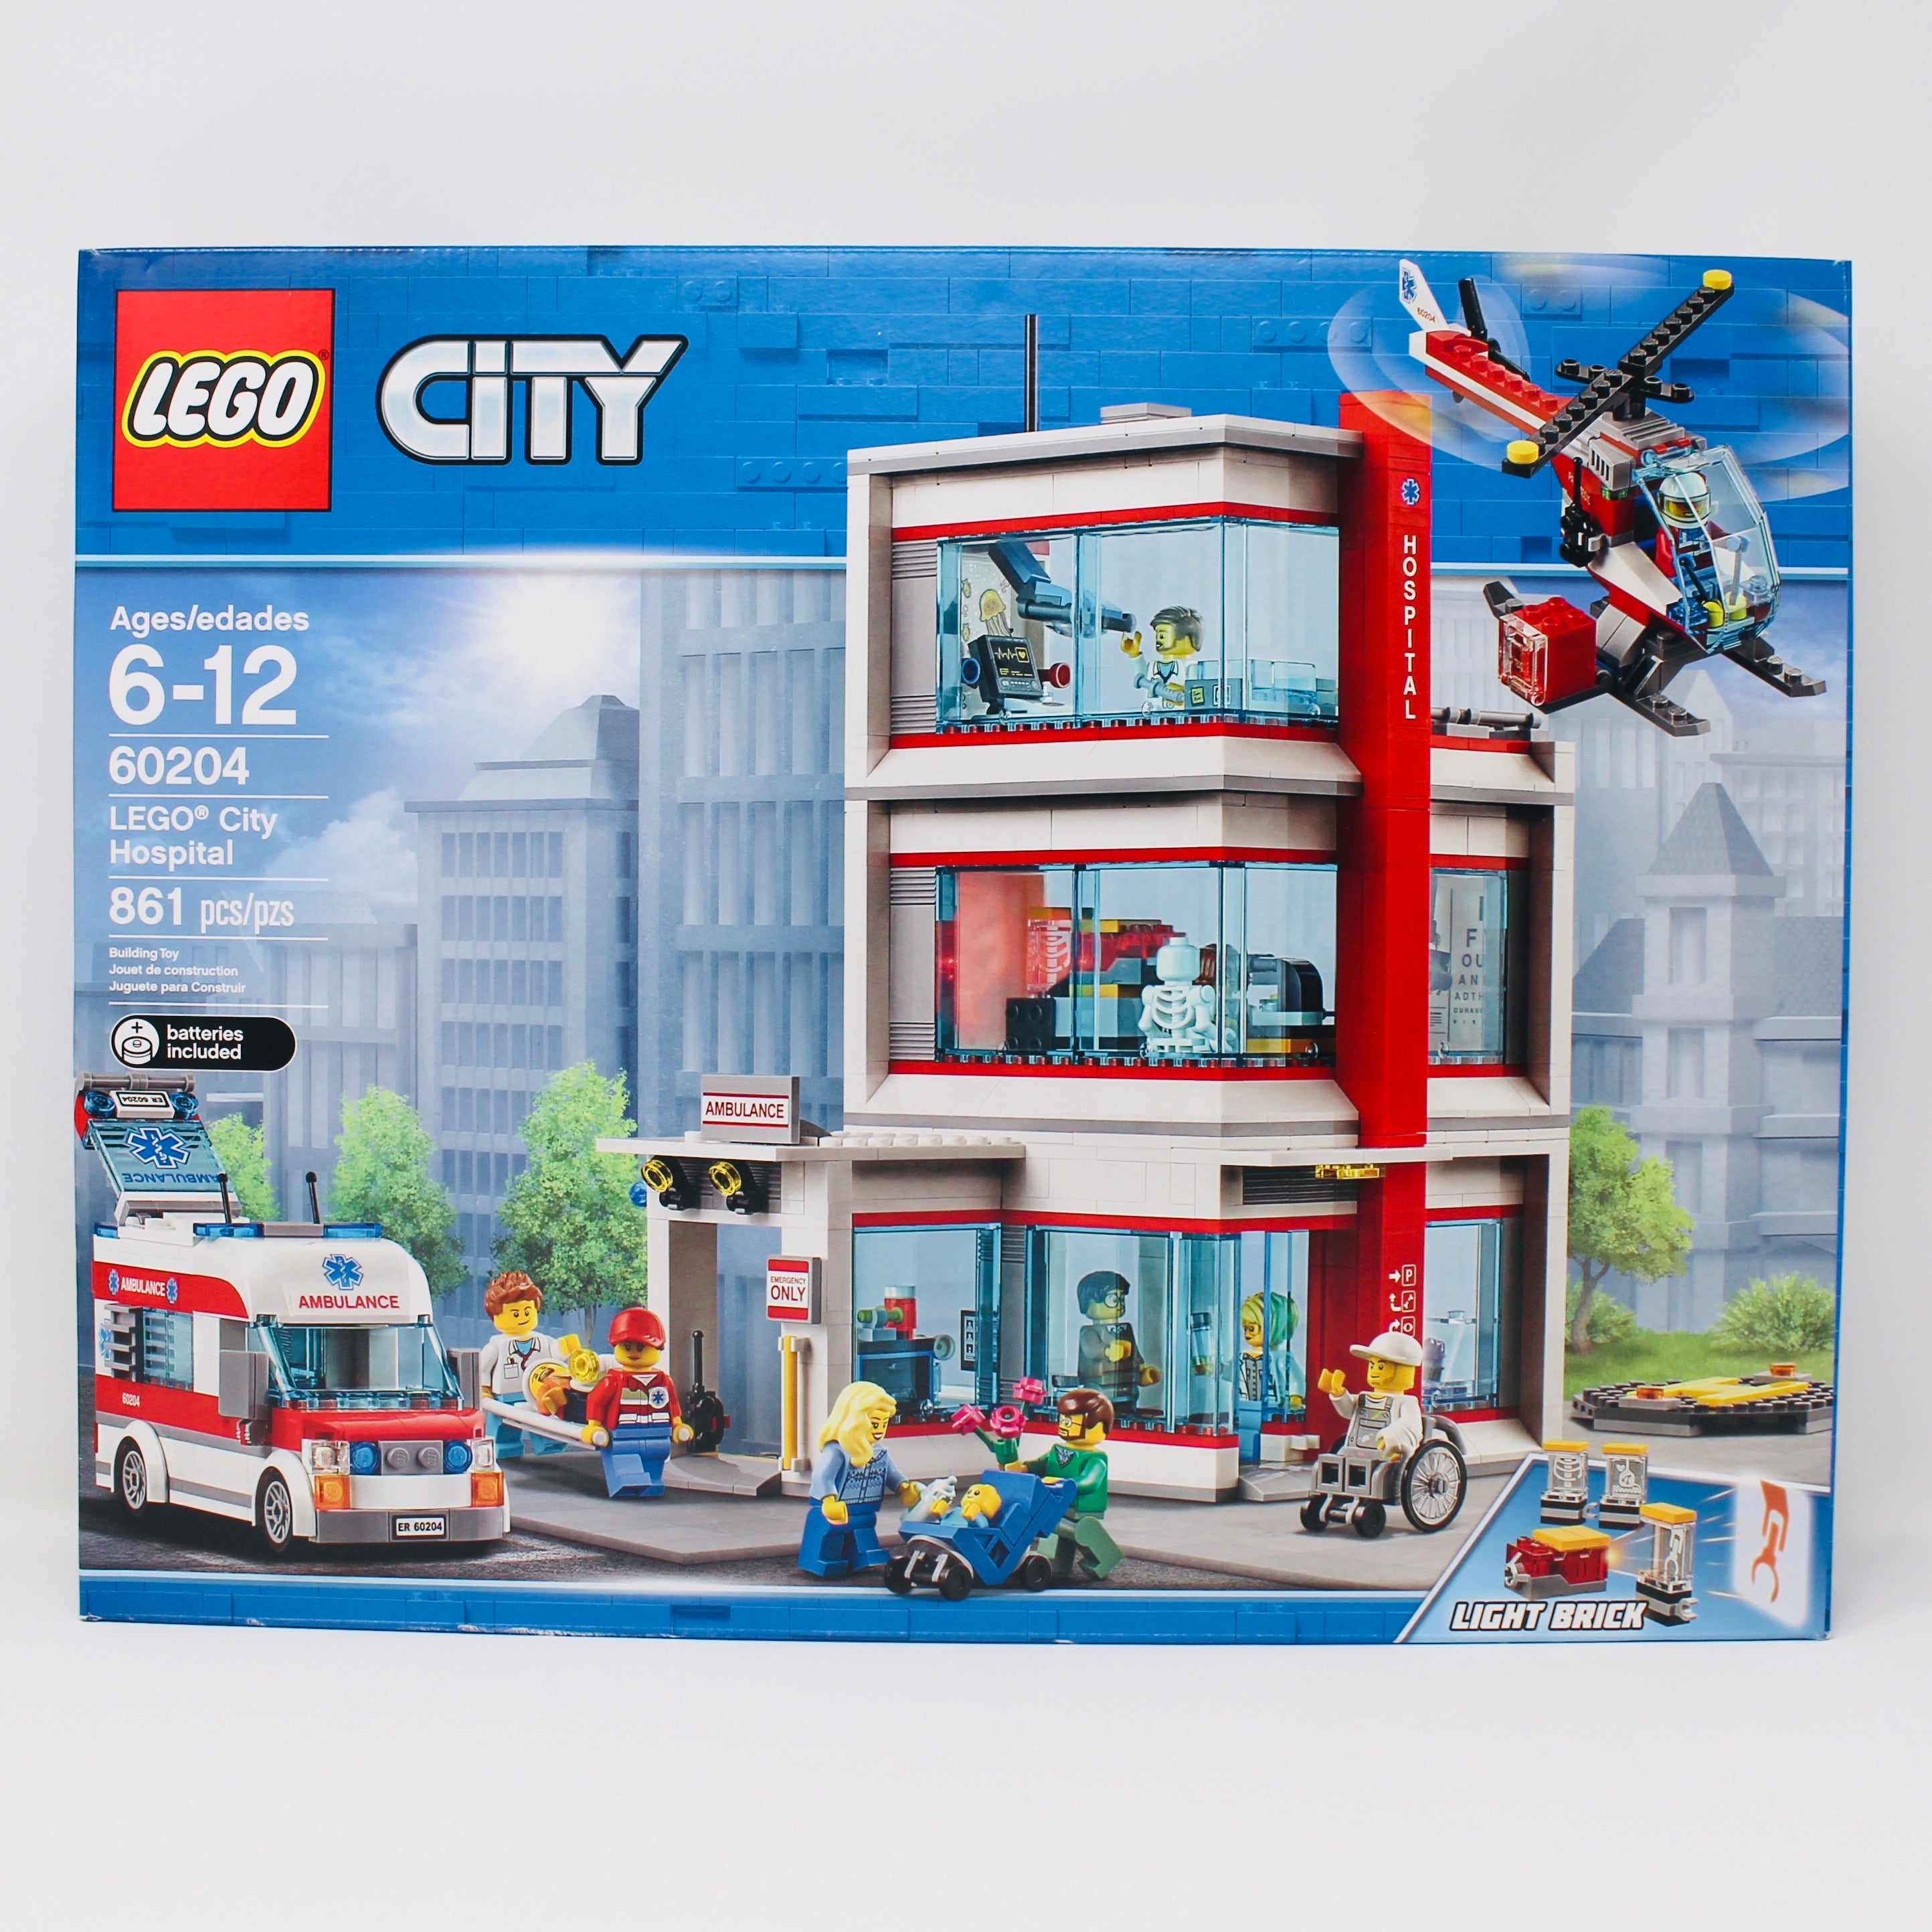 Retired Set 60204 City LEGO City Hospital